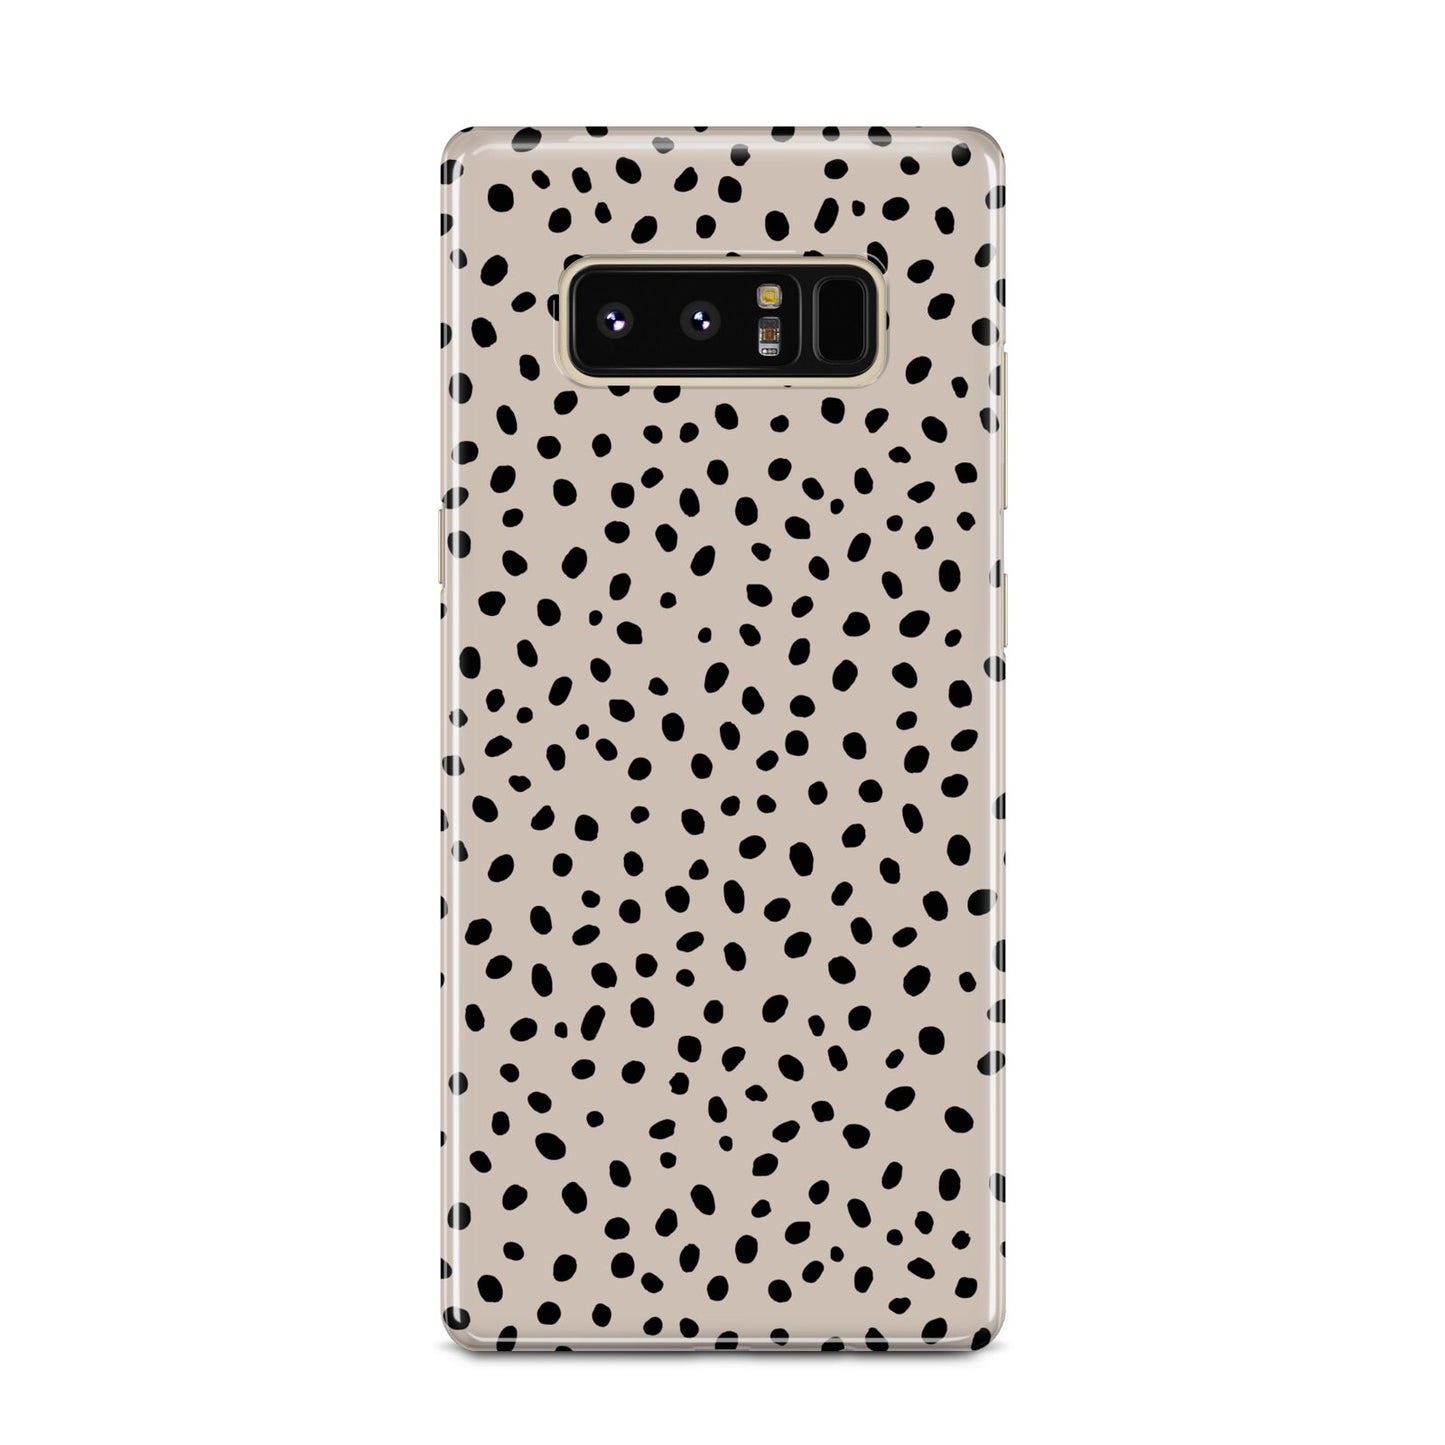 Almond Polka Dot Samsung Galaxy Note 8 Case